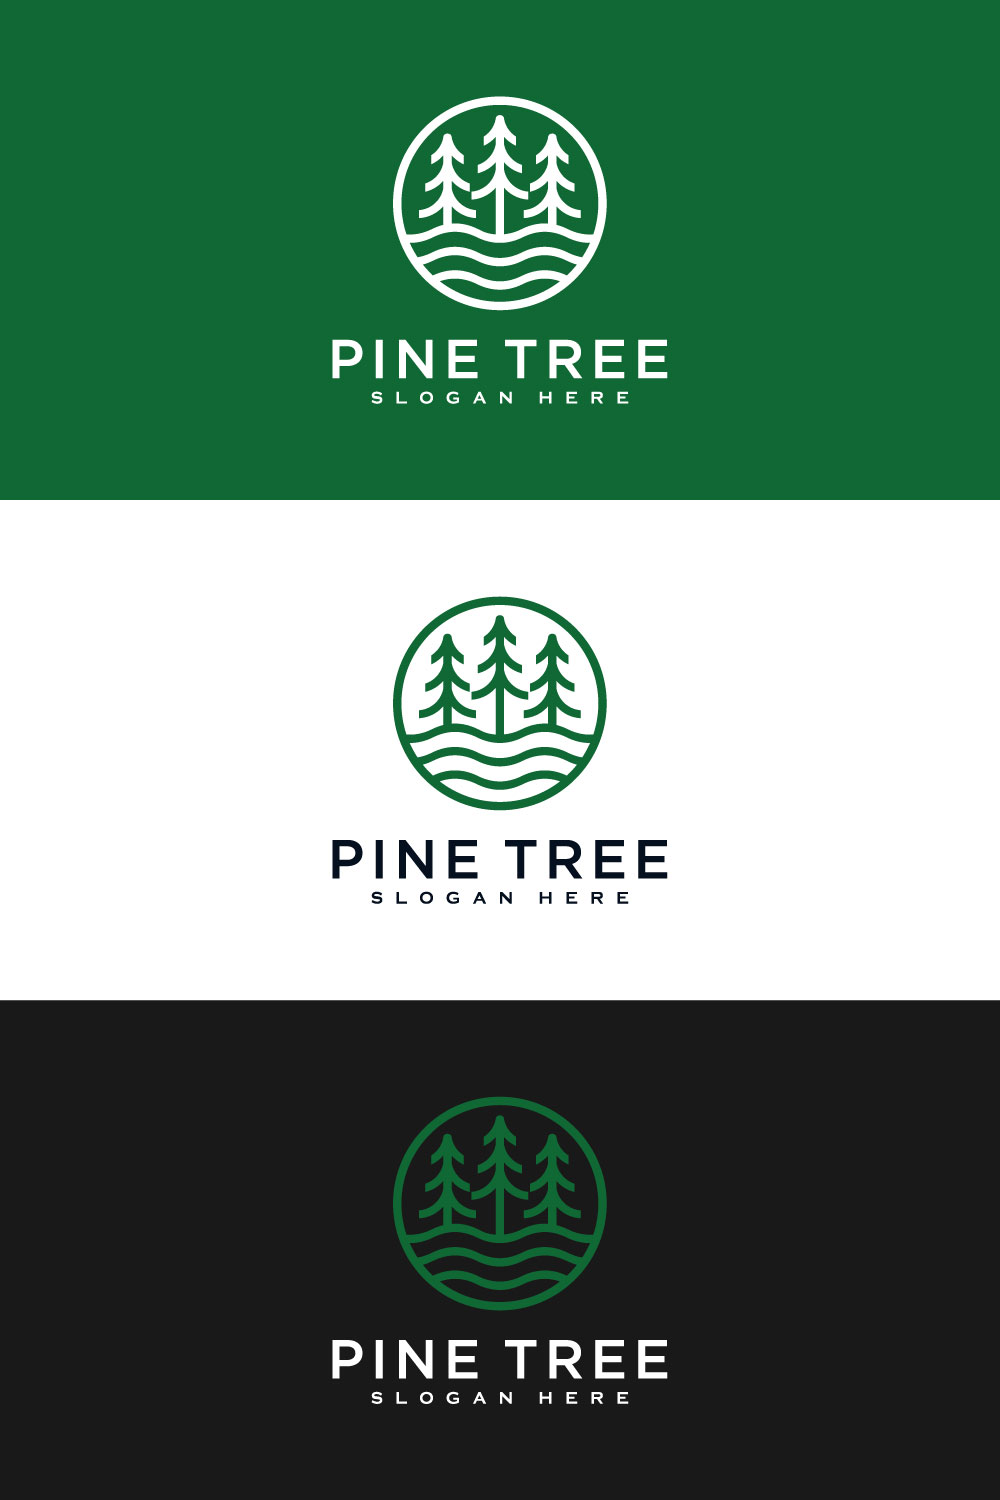 Pine Tree Beautiful Logo Vector Design Template Pinterest Image.